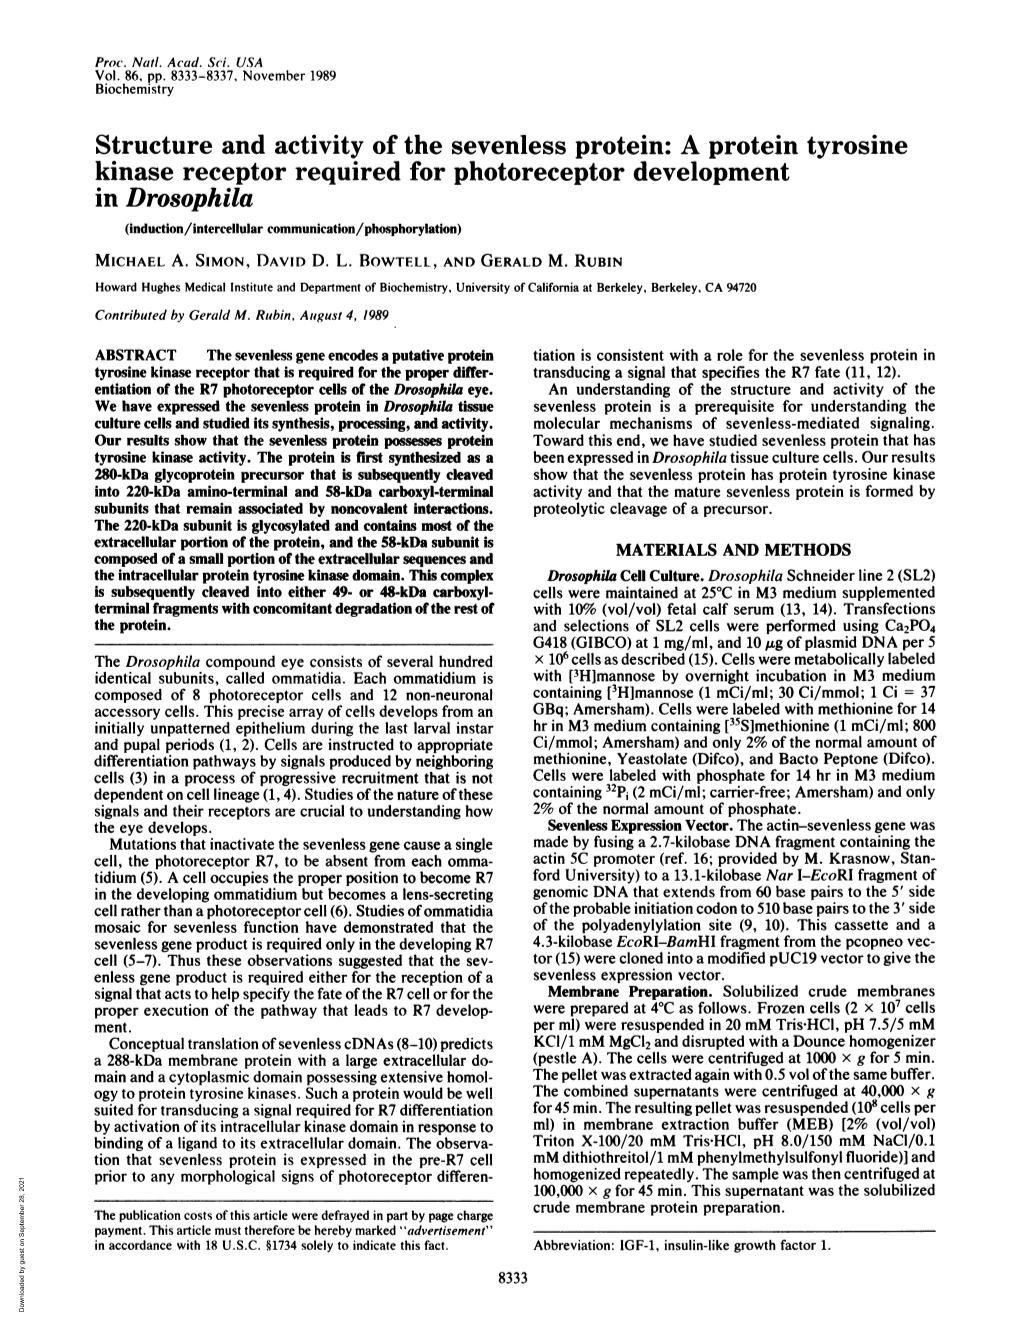 A Protein Tyrosine Kinase Receptor Required for Photoreceptor Development in Drosophila (Induction/Intercellular Communication/Phosphorylation) MICHAEL A